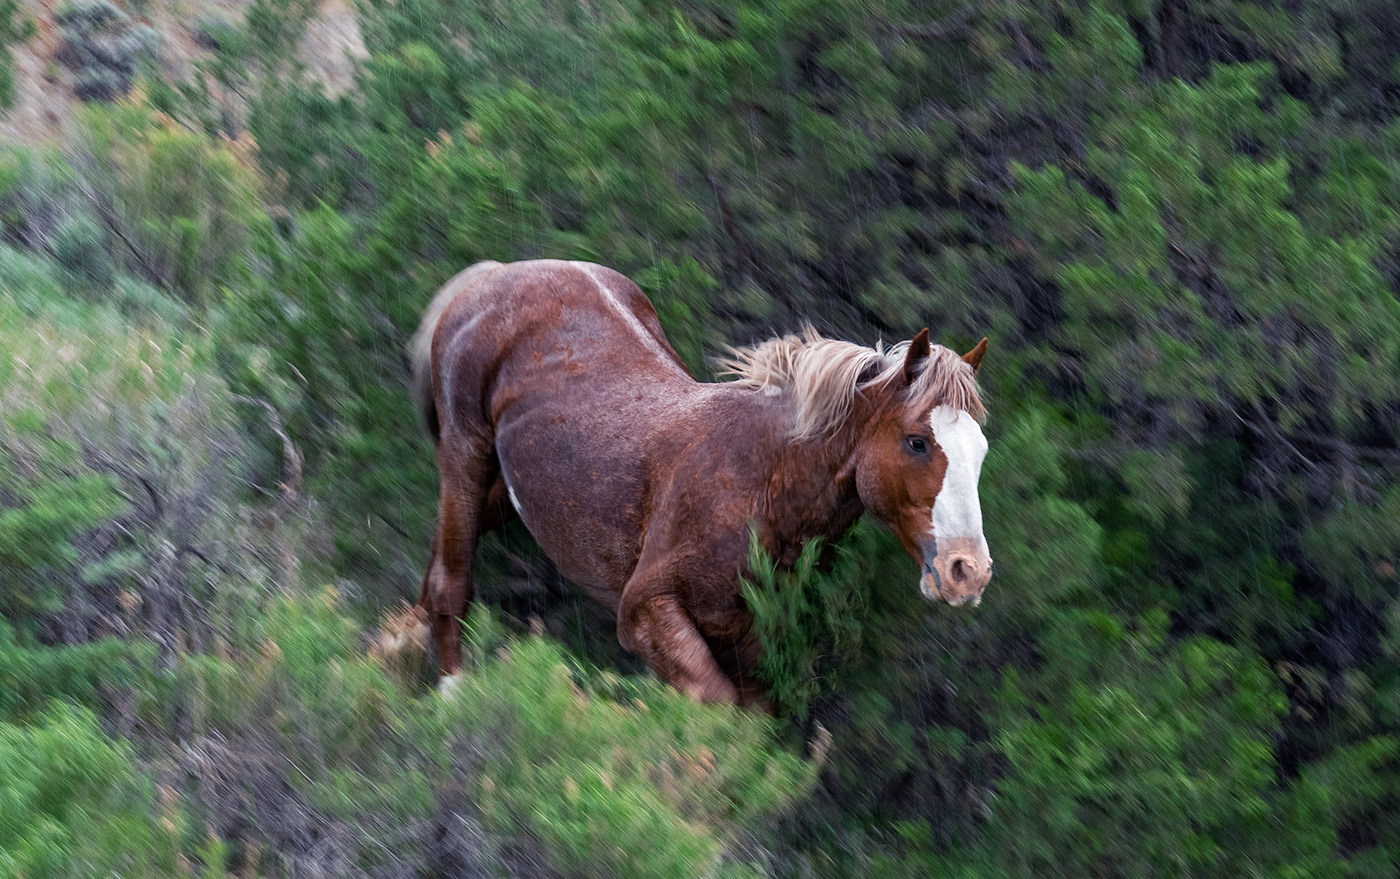 Wild horses (mustangs, feral horses) roam freely in the park.